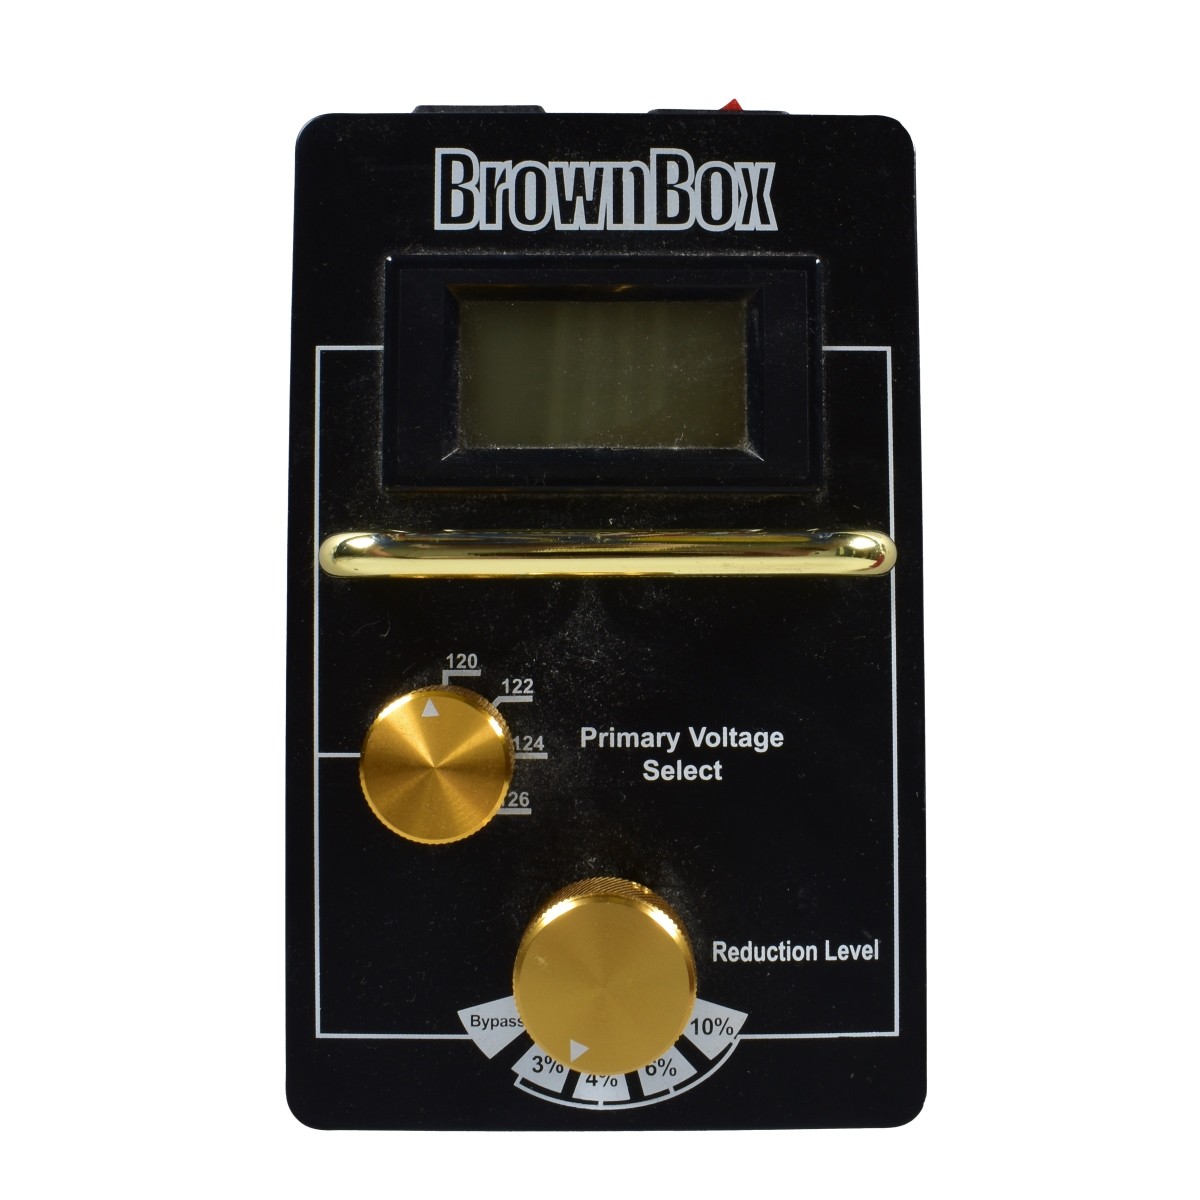 Brownbox Reg. and a Vox Original Pedal